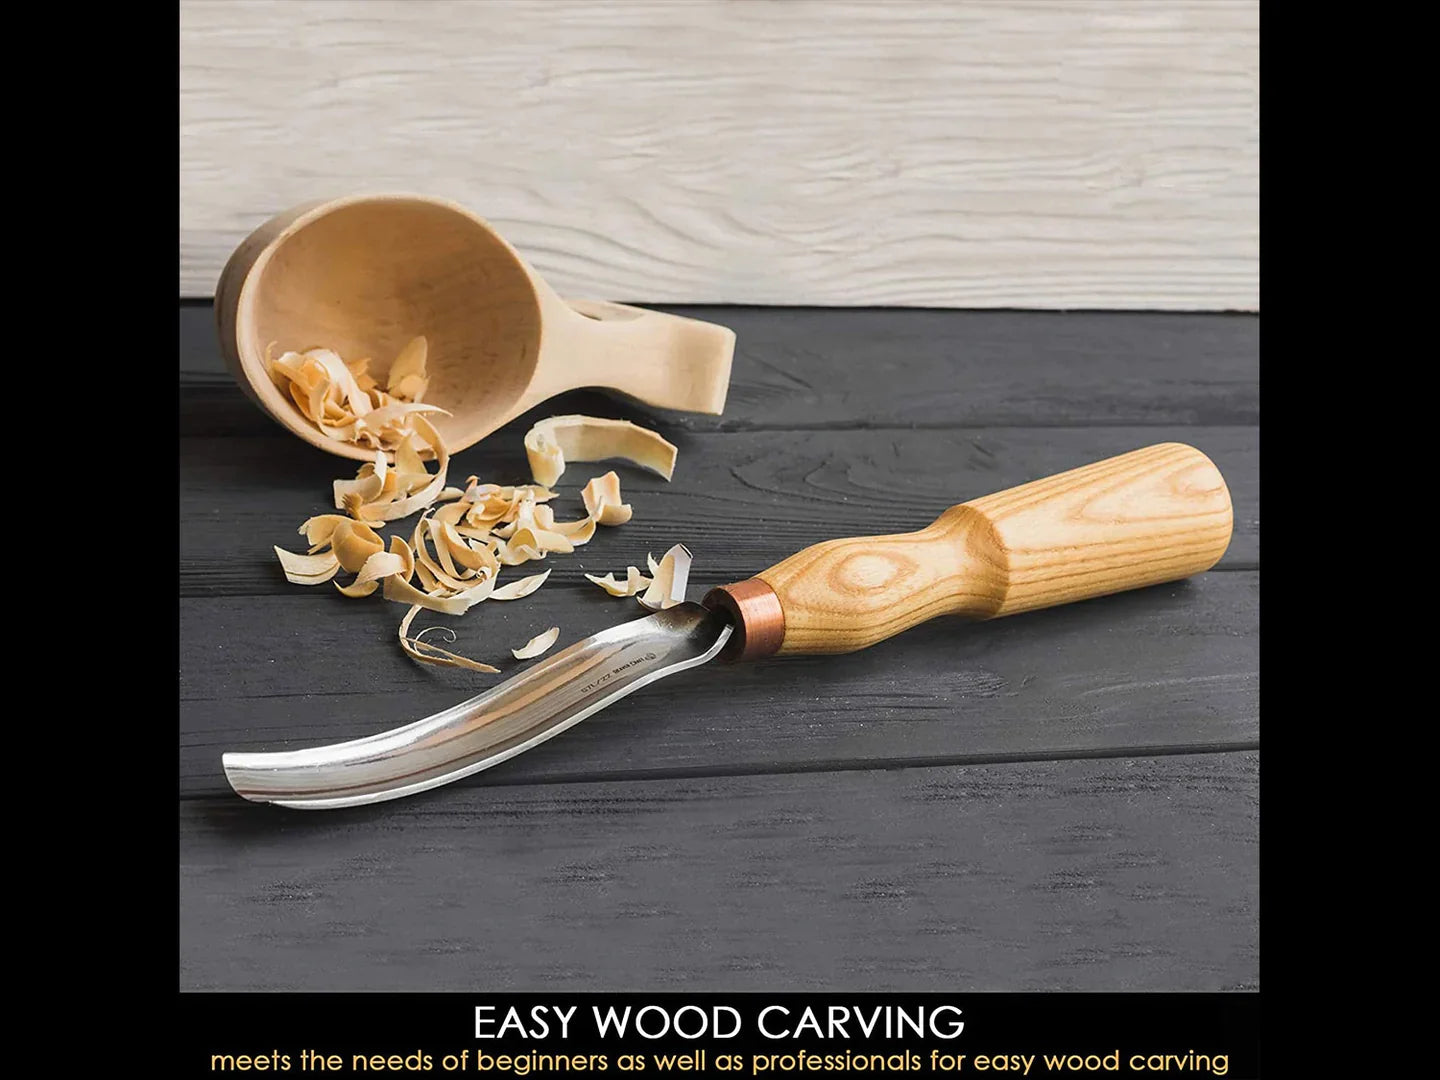 BeaverCraft G7L/22 Long Bent Gouge Wood Carving Tool 7L (22mm)